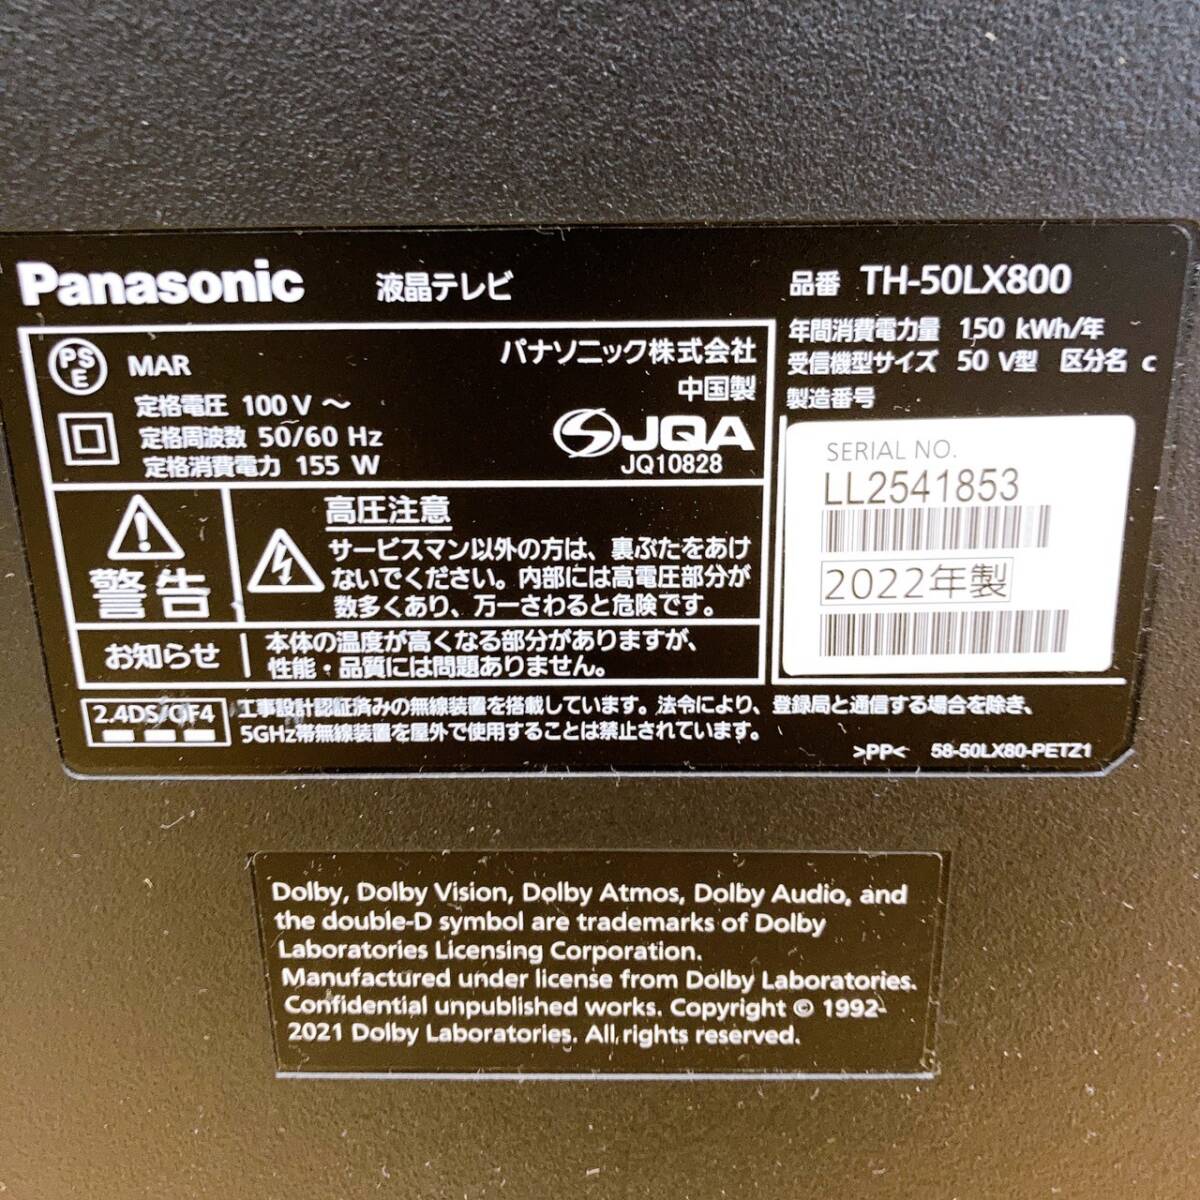  Panasonic Panasonic жидкокристаллический телевизор TH-50LX800 2022 год производства /TH240509③-C